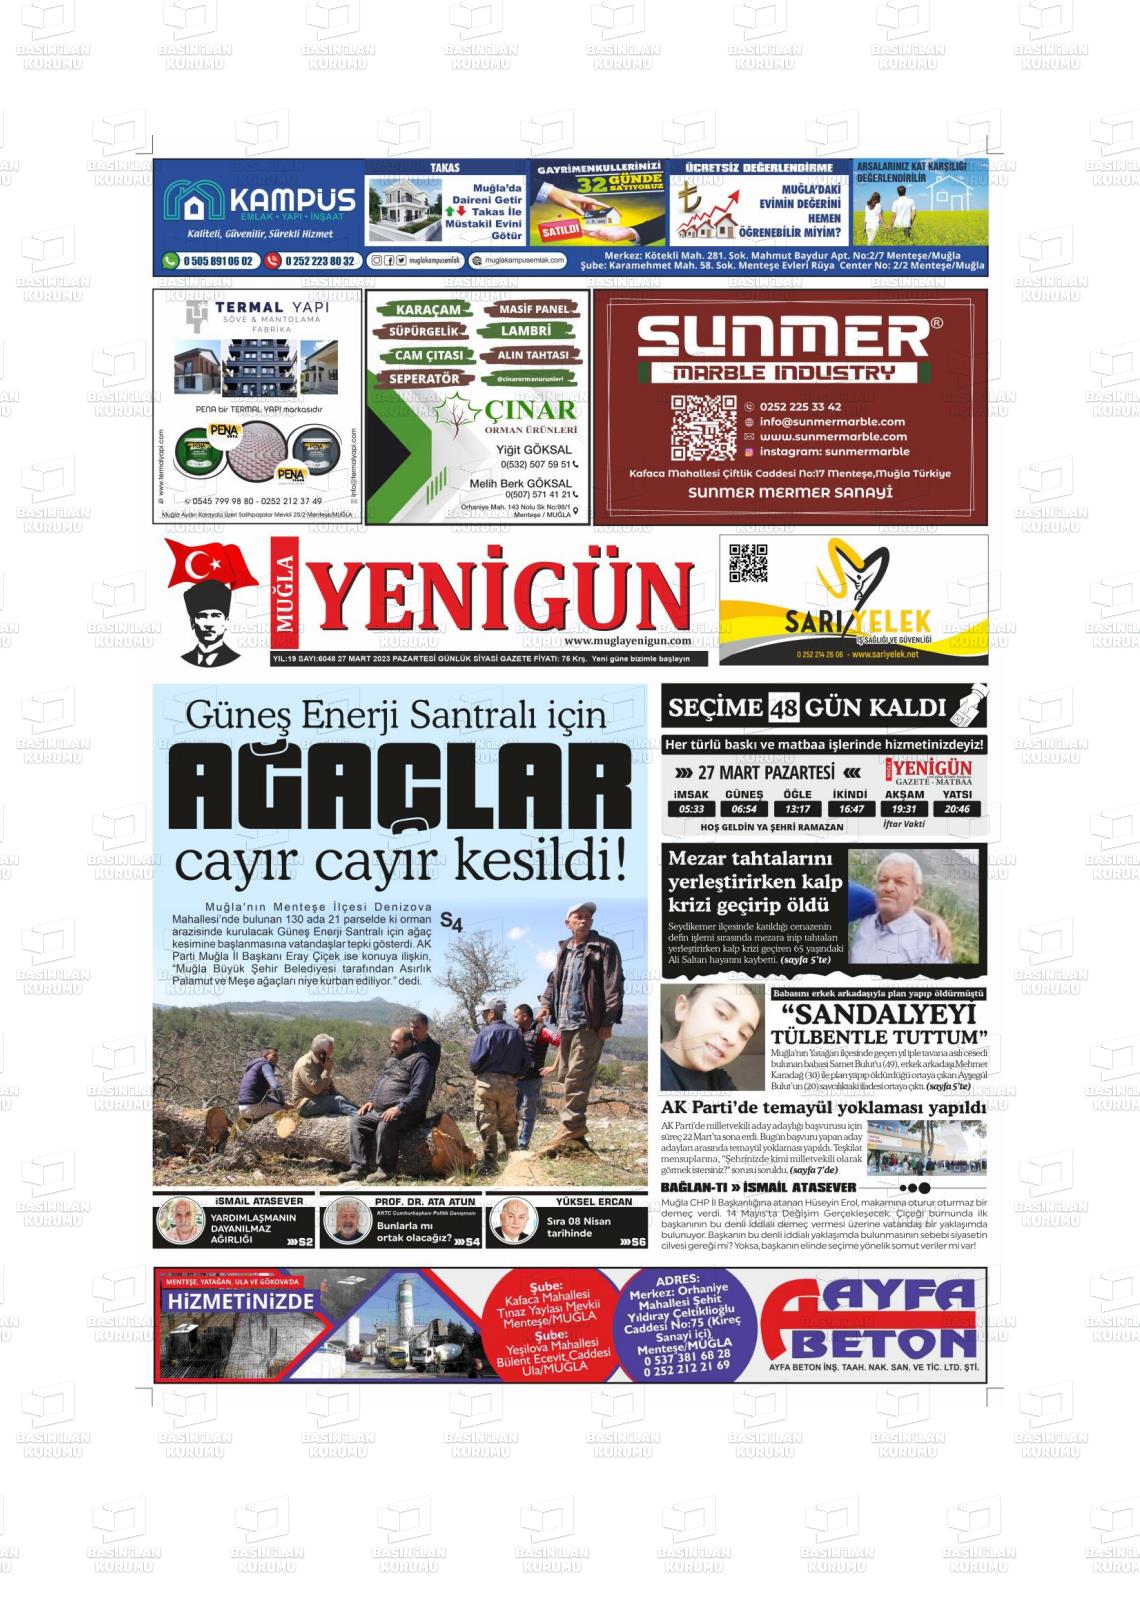 27 Mart 2023 Muğla Yenigün Gazete Manşeti